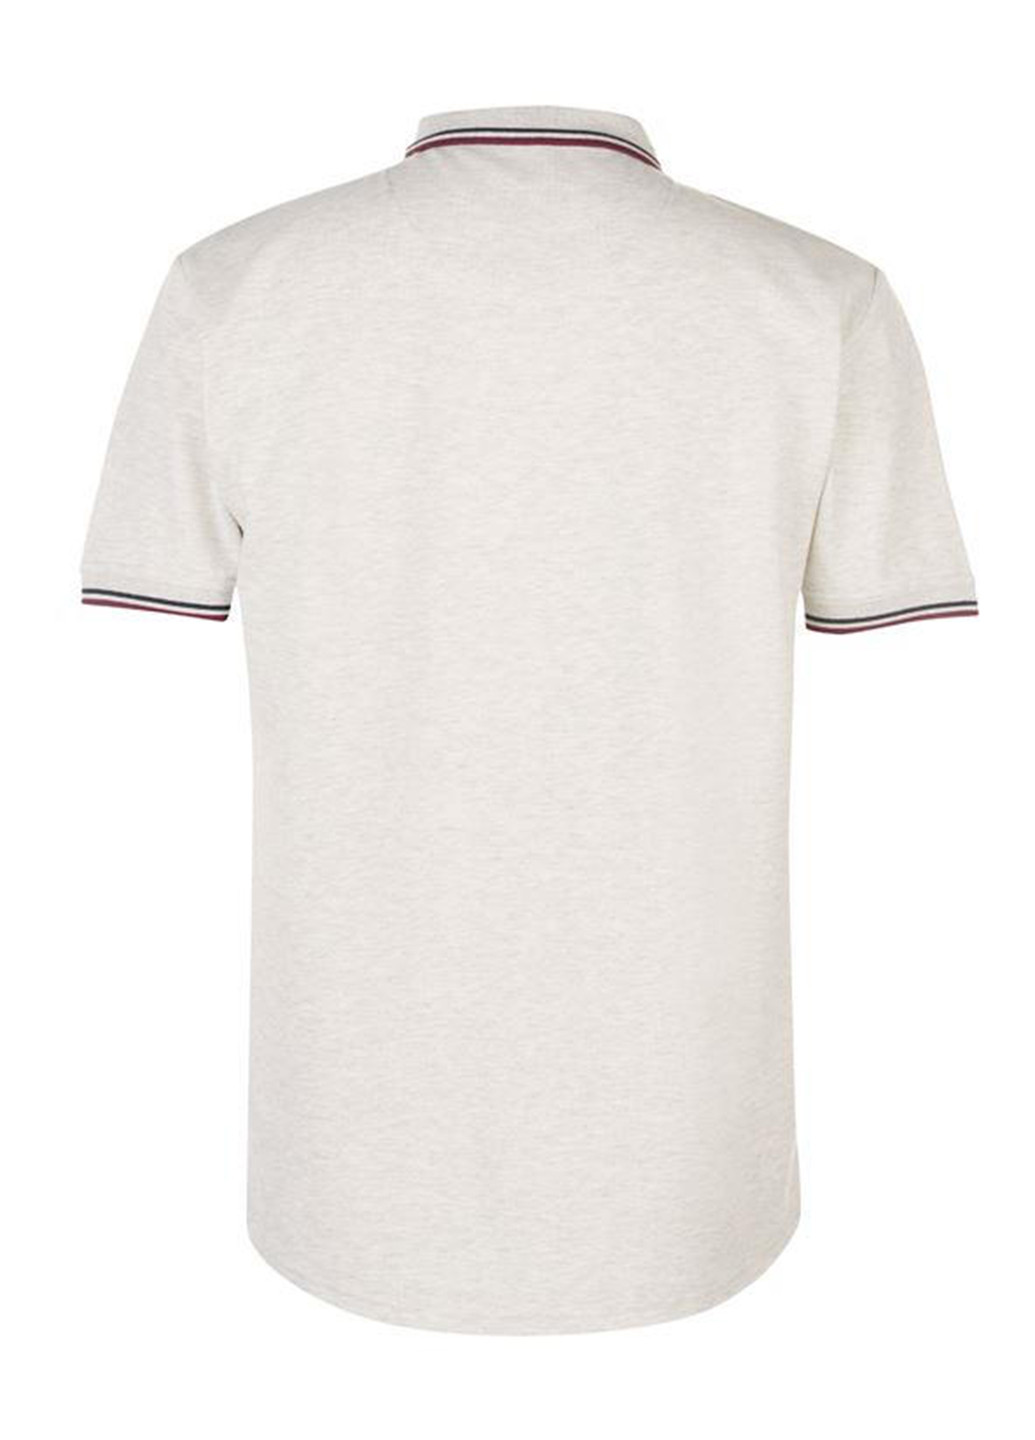 Белая футболка-поло для мужчин Firetrap с логотипом